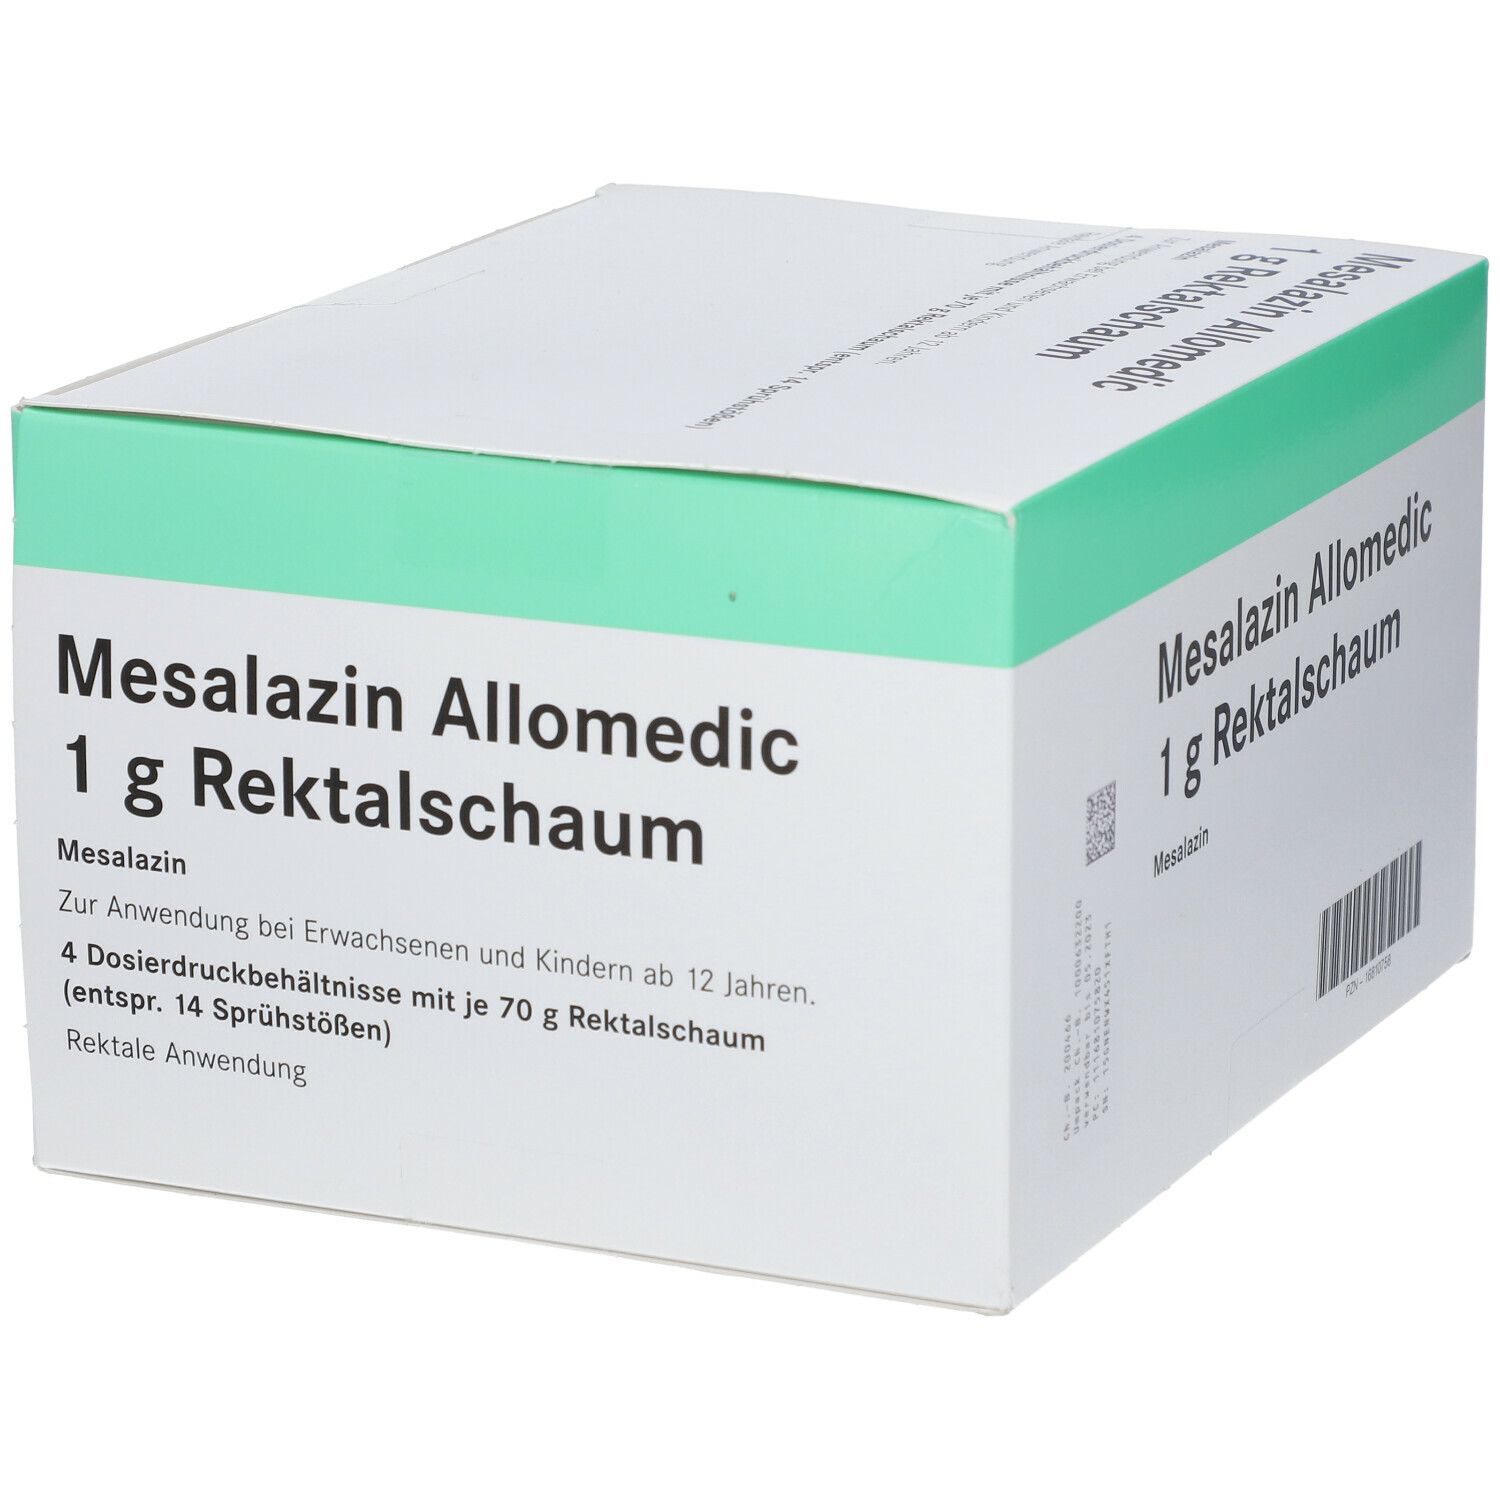 Mesalazin Allomedic 1 g